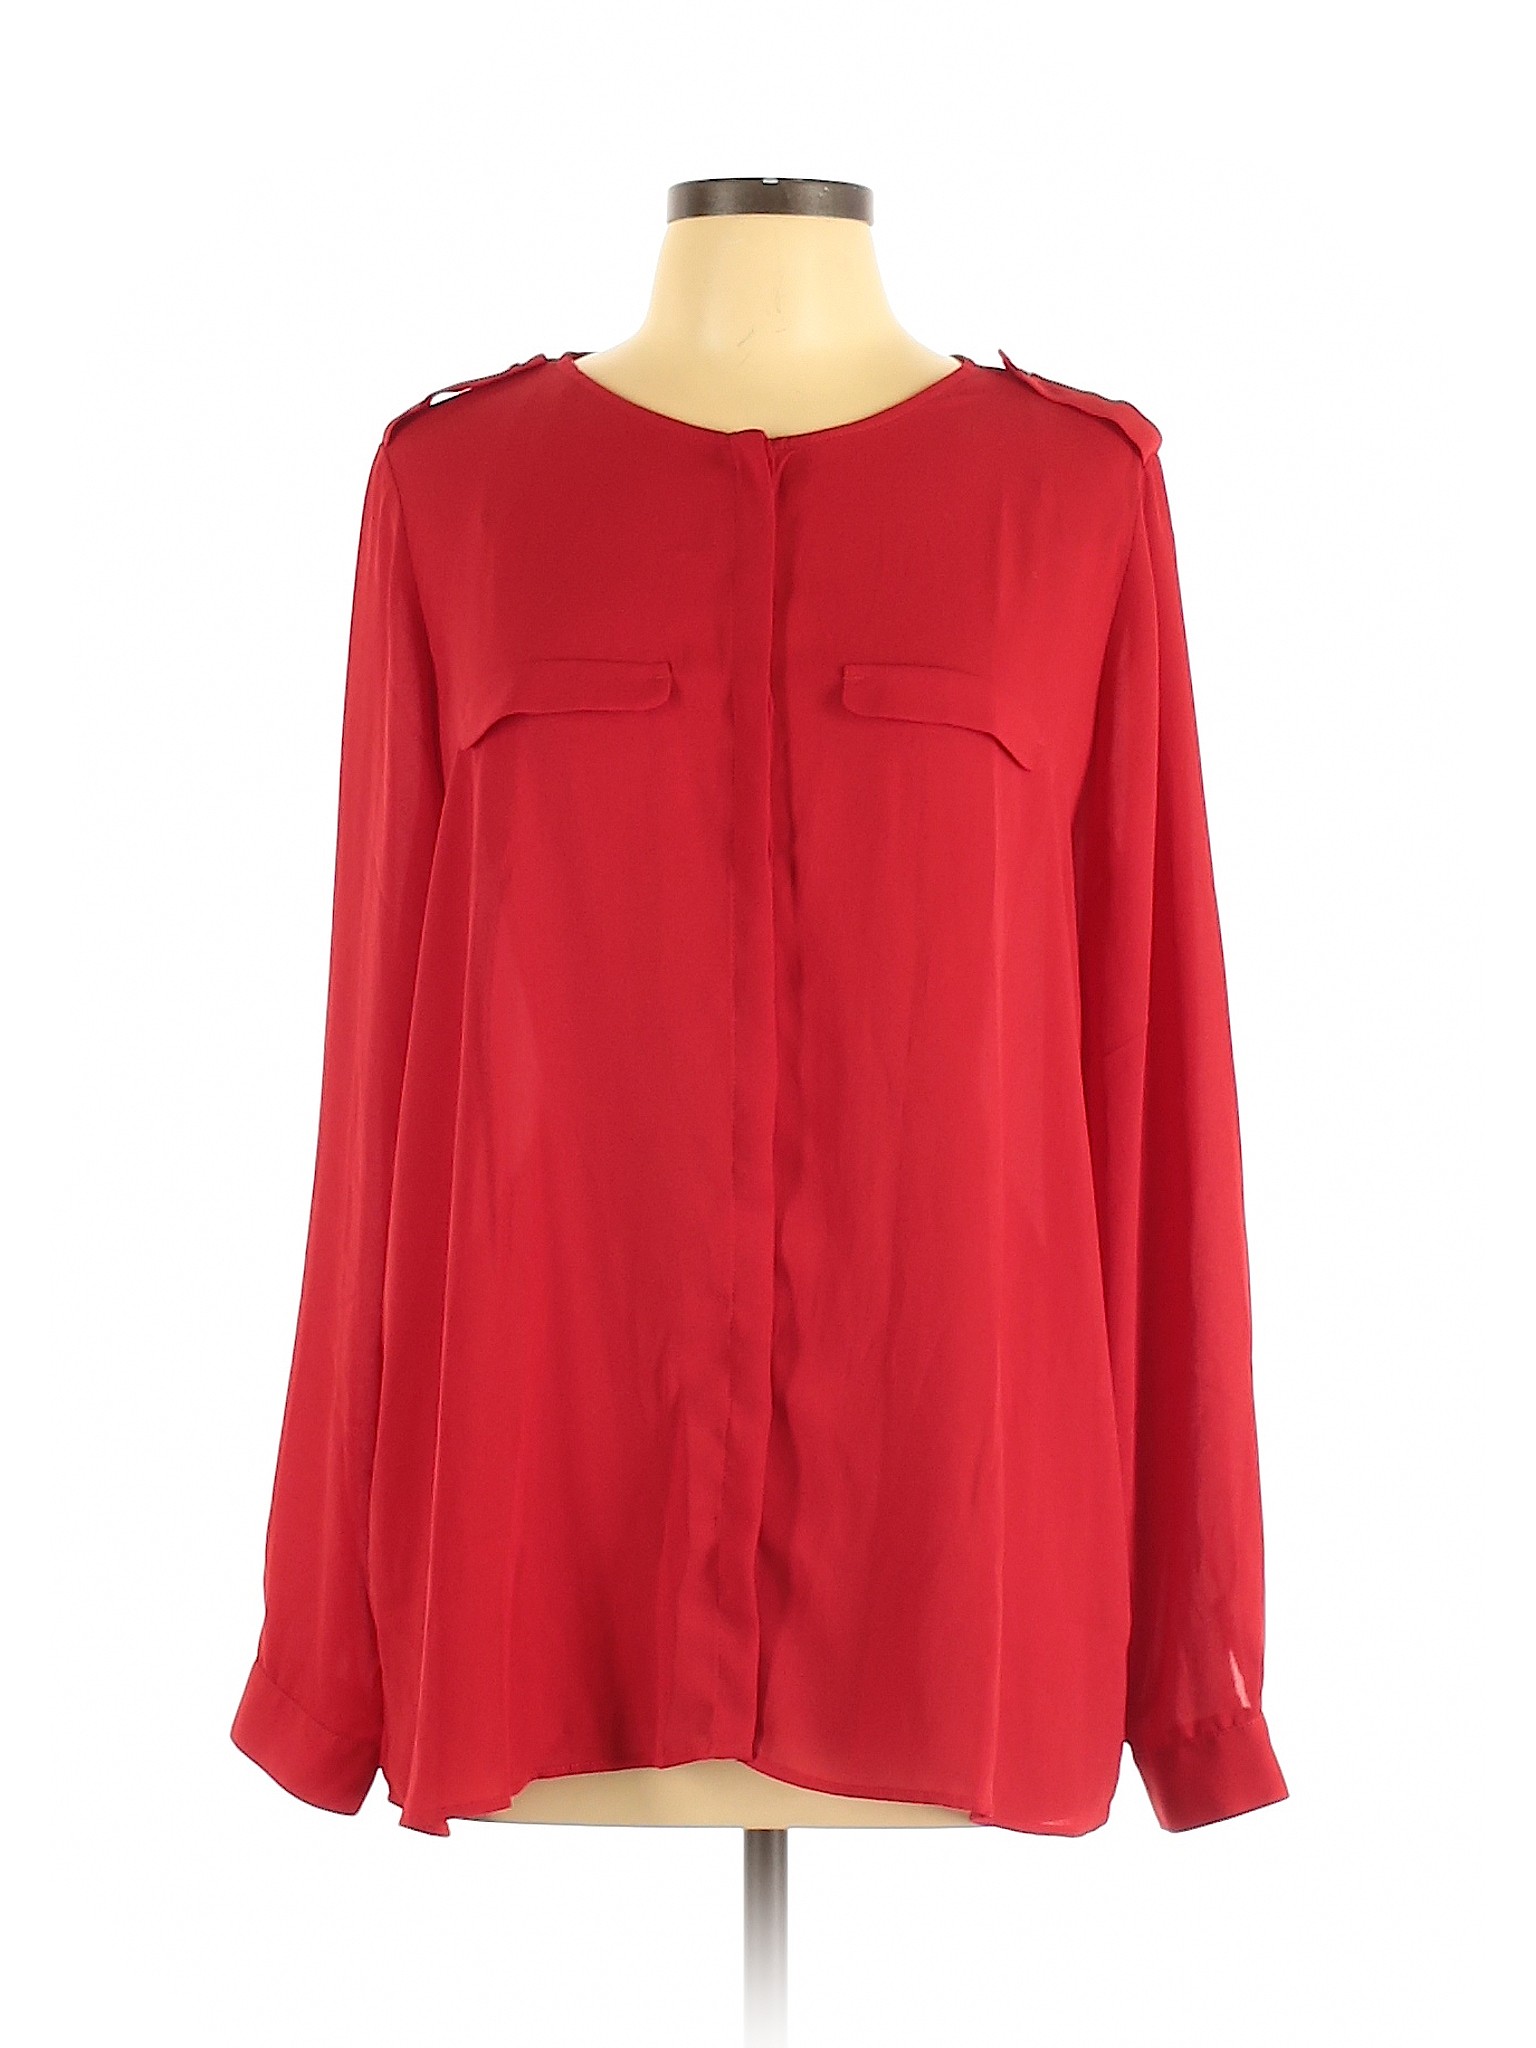 Violeta by Mango Women Red Long Sleeve Blouse L Plus | eBay